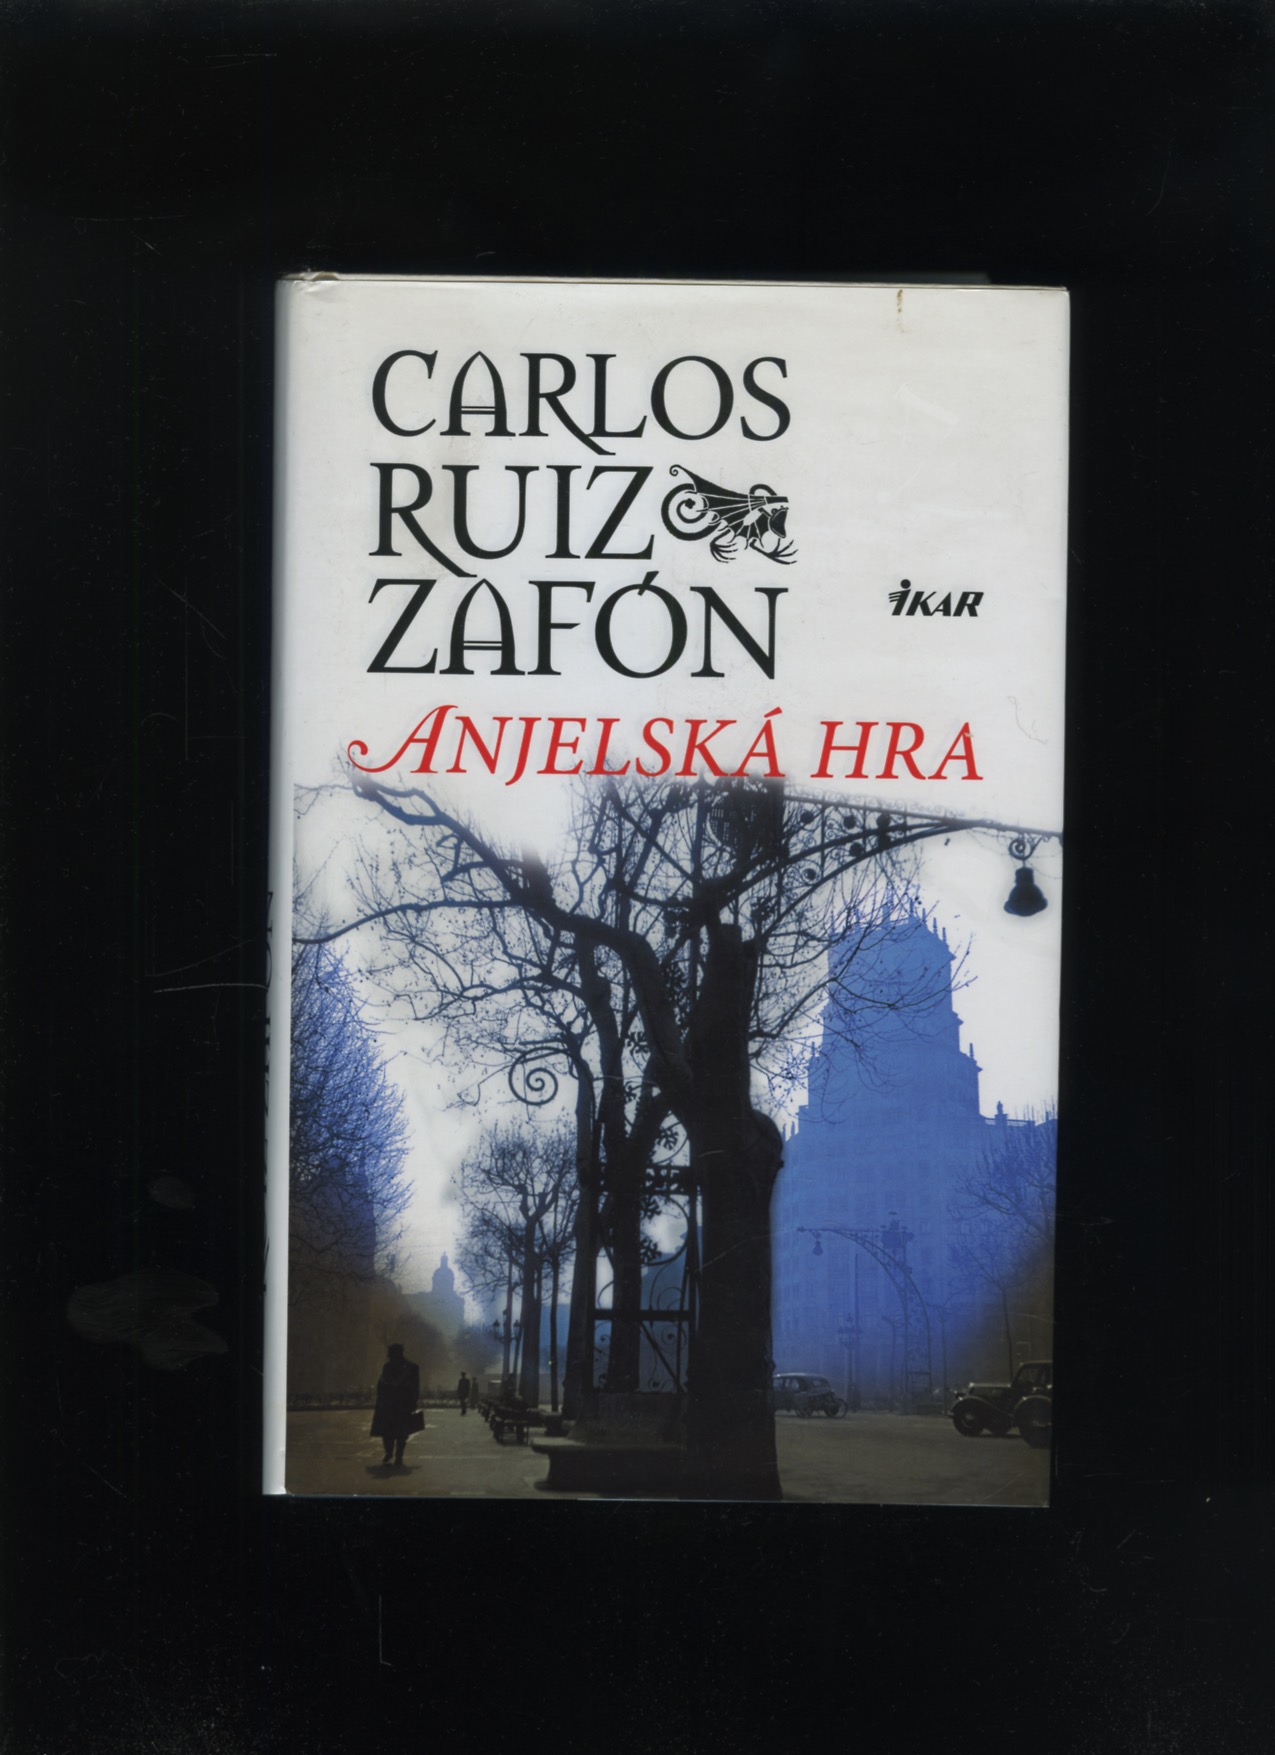 Anjelská hra (Carlos Ruiz Zafón)